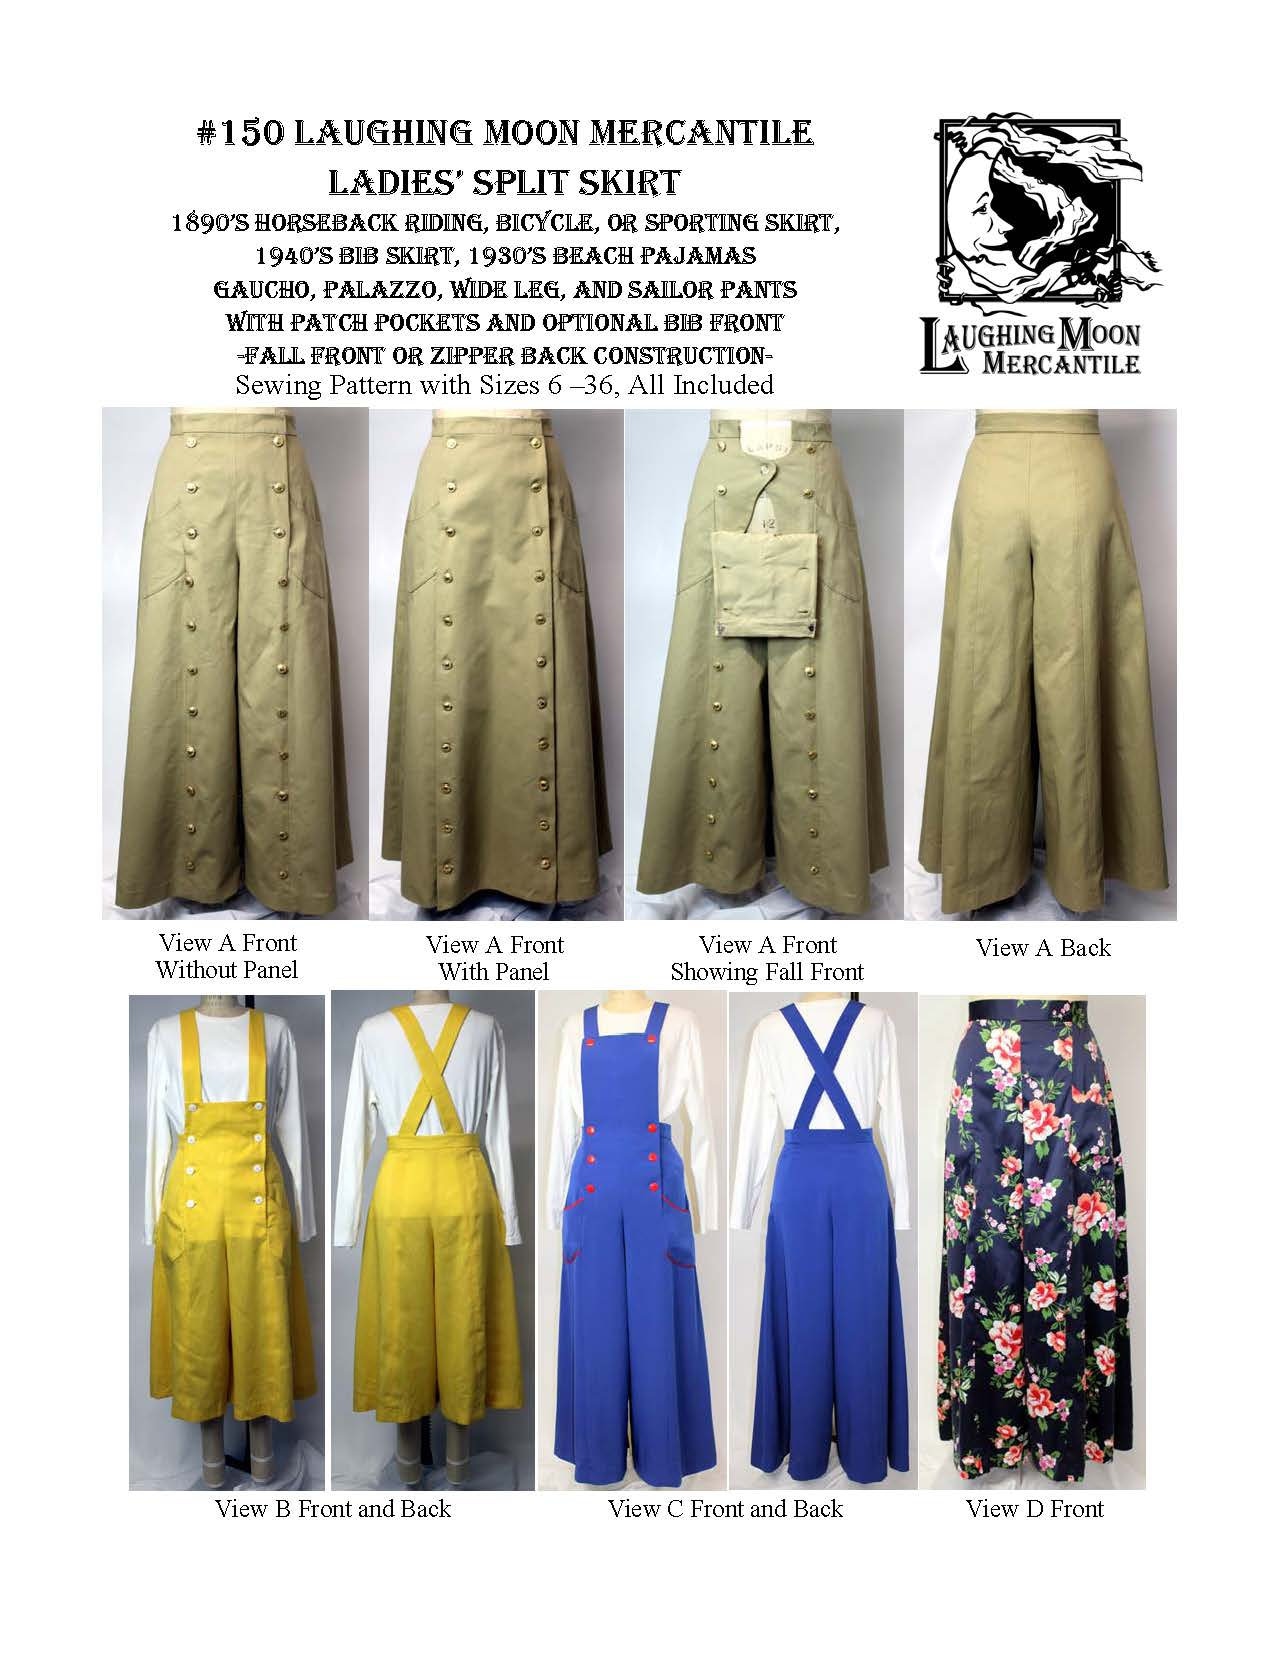 8 Riding Split Skirt ideas  split skirt vintage outfits historical  clothing